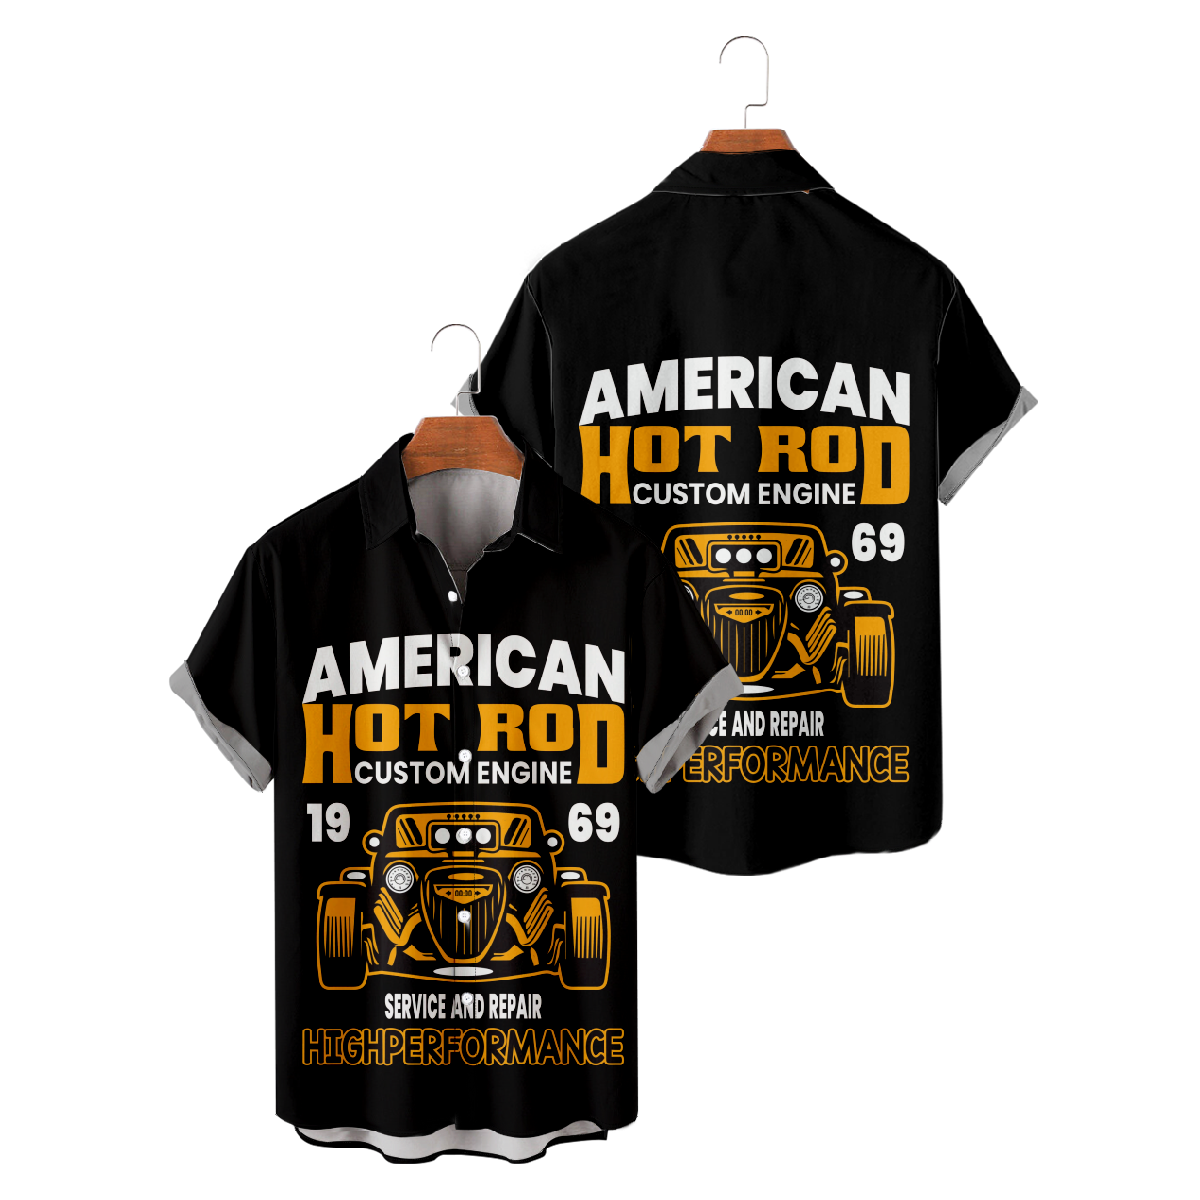 American Hot Rod Button Up Shirt Black Short Sleeve Shirt Men's Allover Print